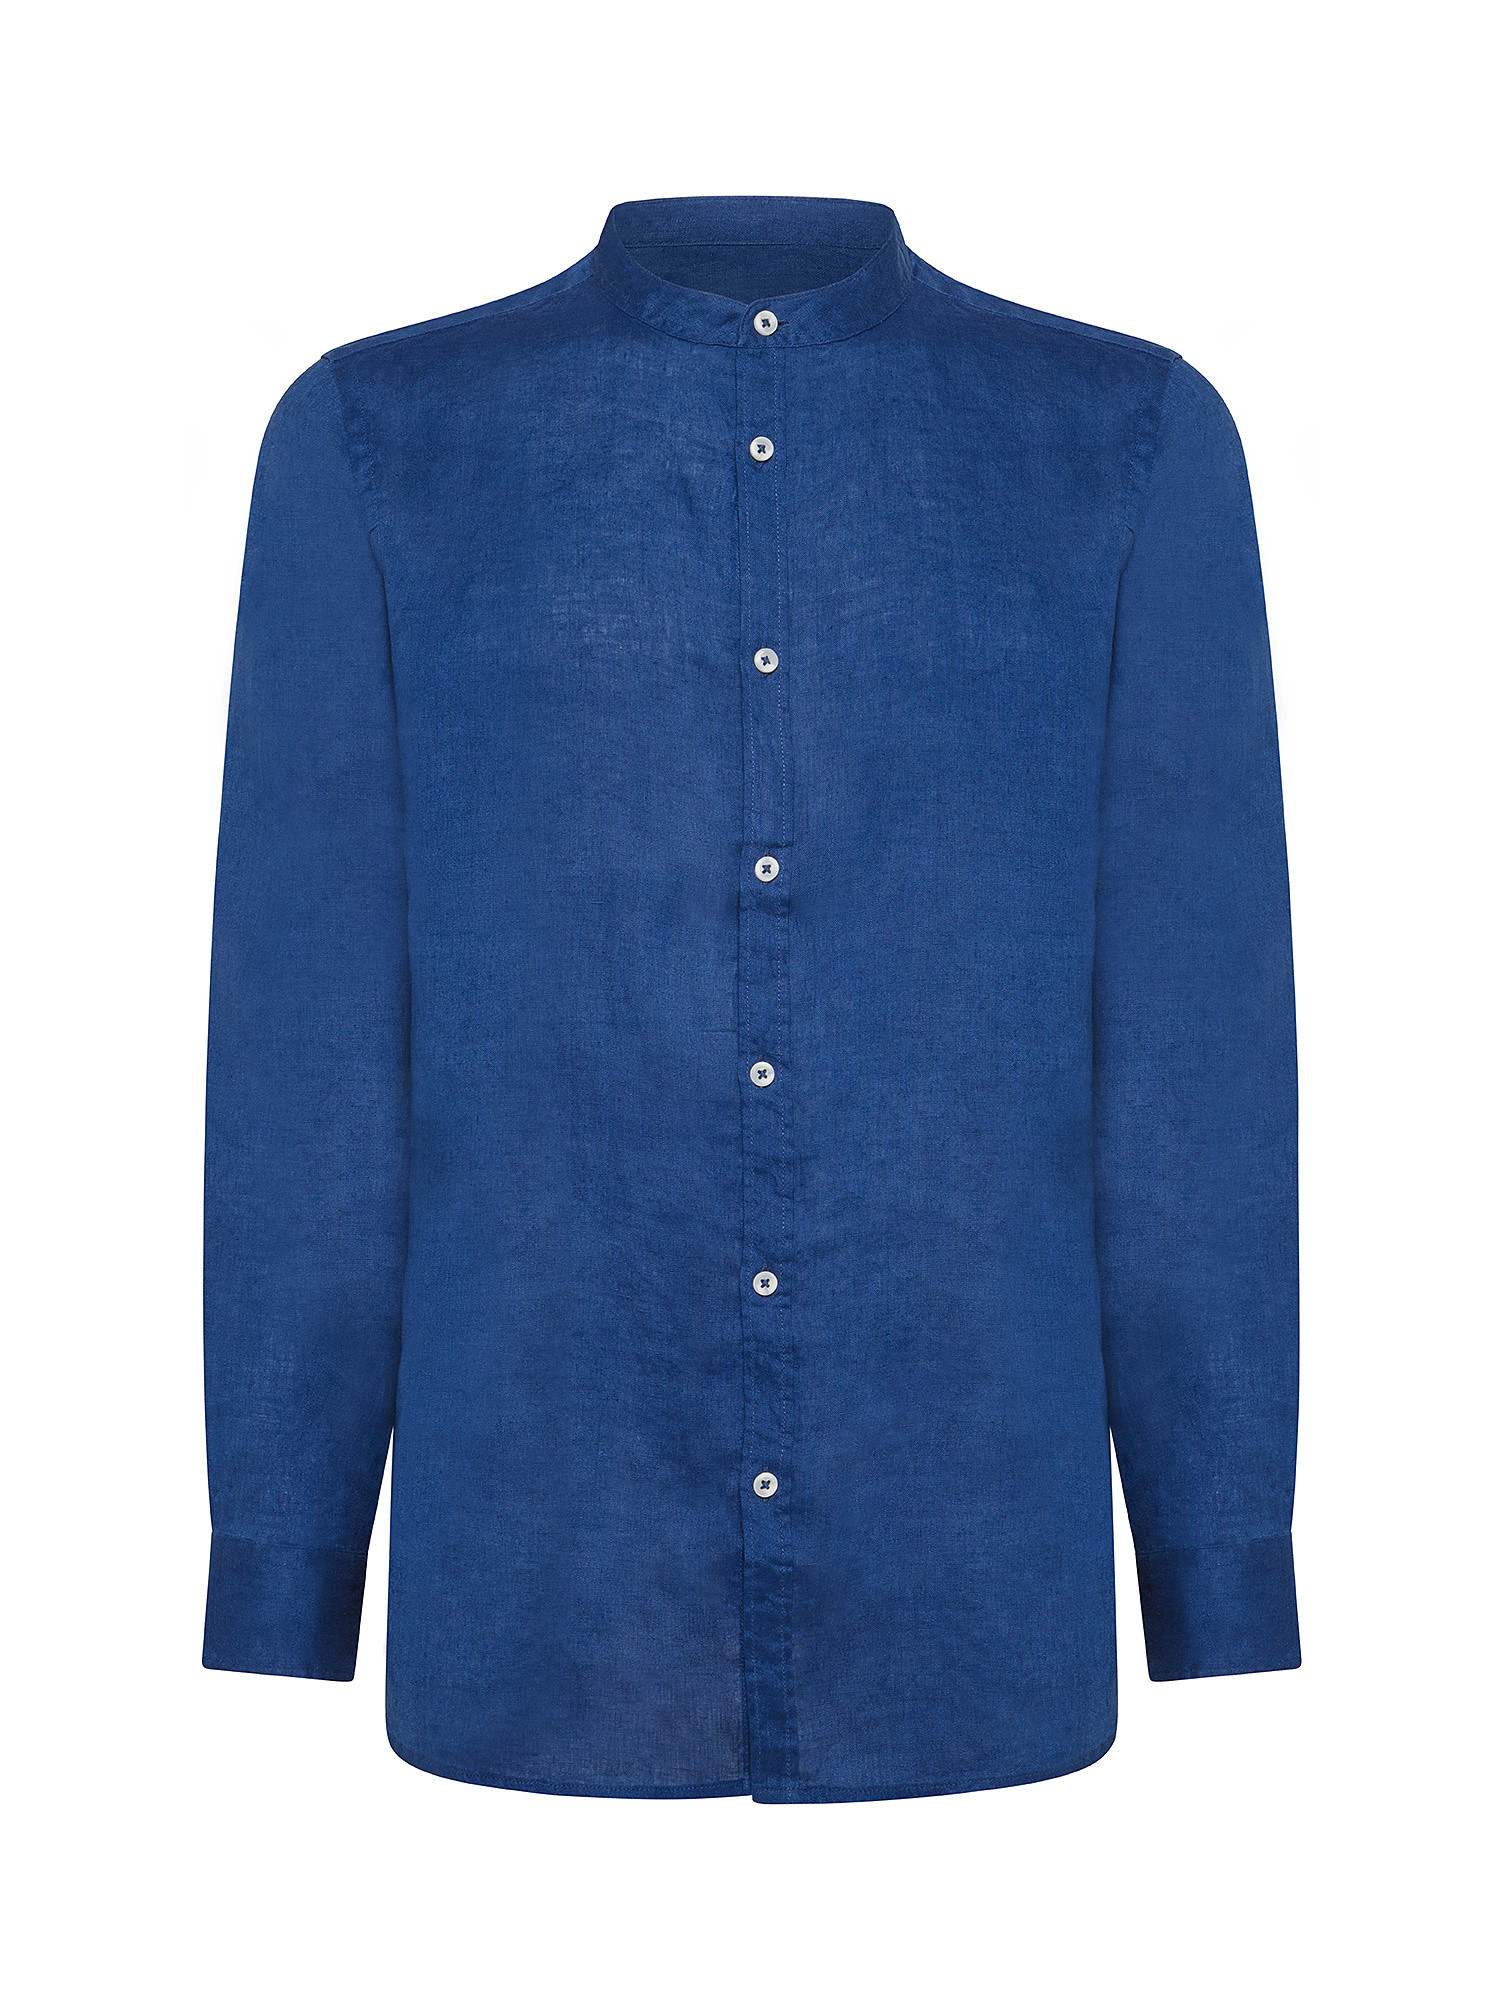 JCT - Camicia coreana in puro lino, Blu royal, large image number 0